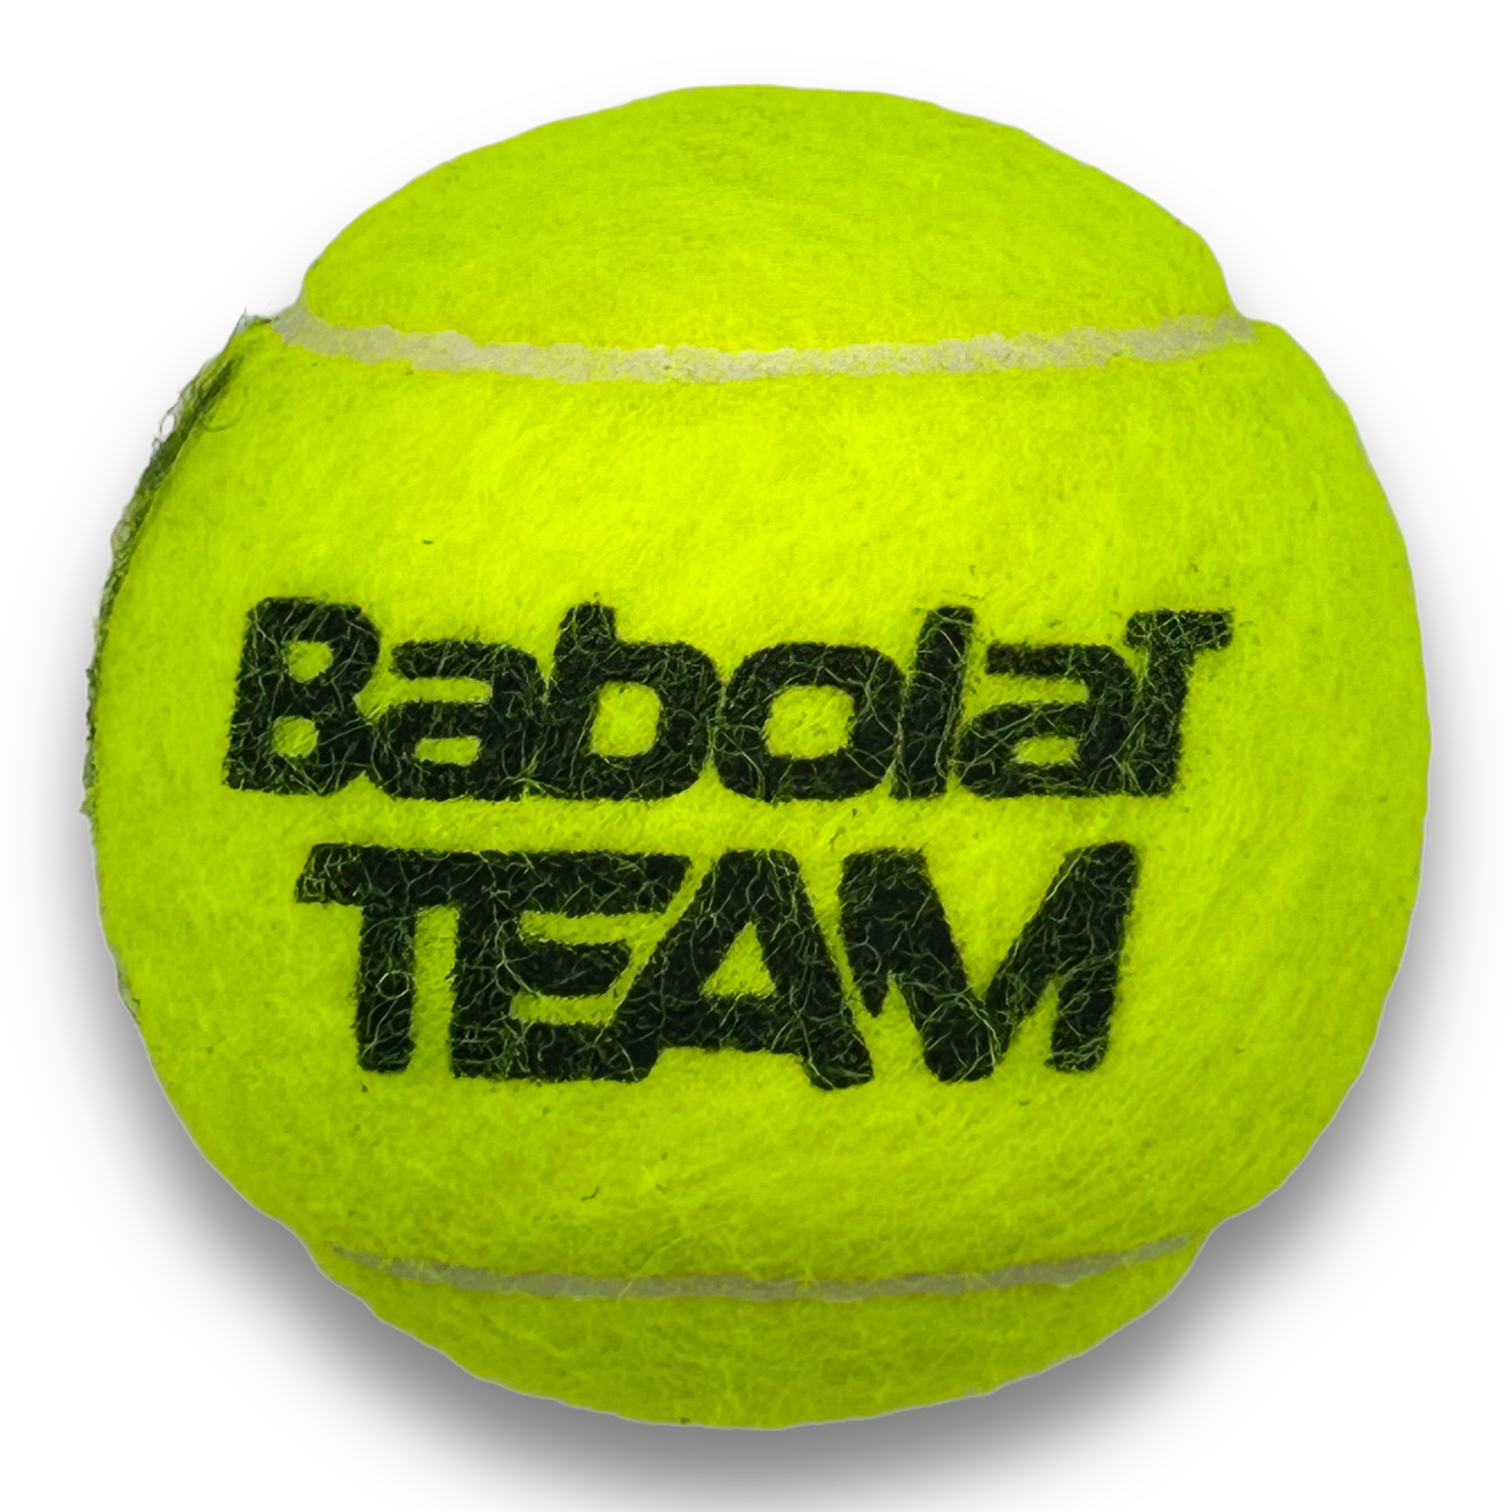 BEN SHELTON SIGNED TEAM BABOLAT TENNIS BALL (AFTAL COA) 2